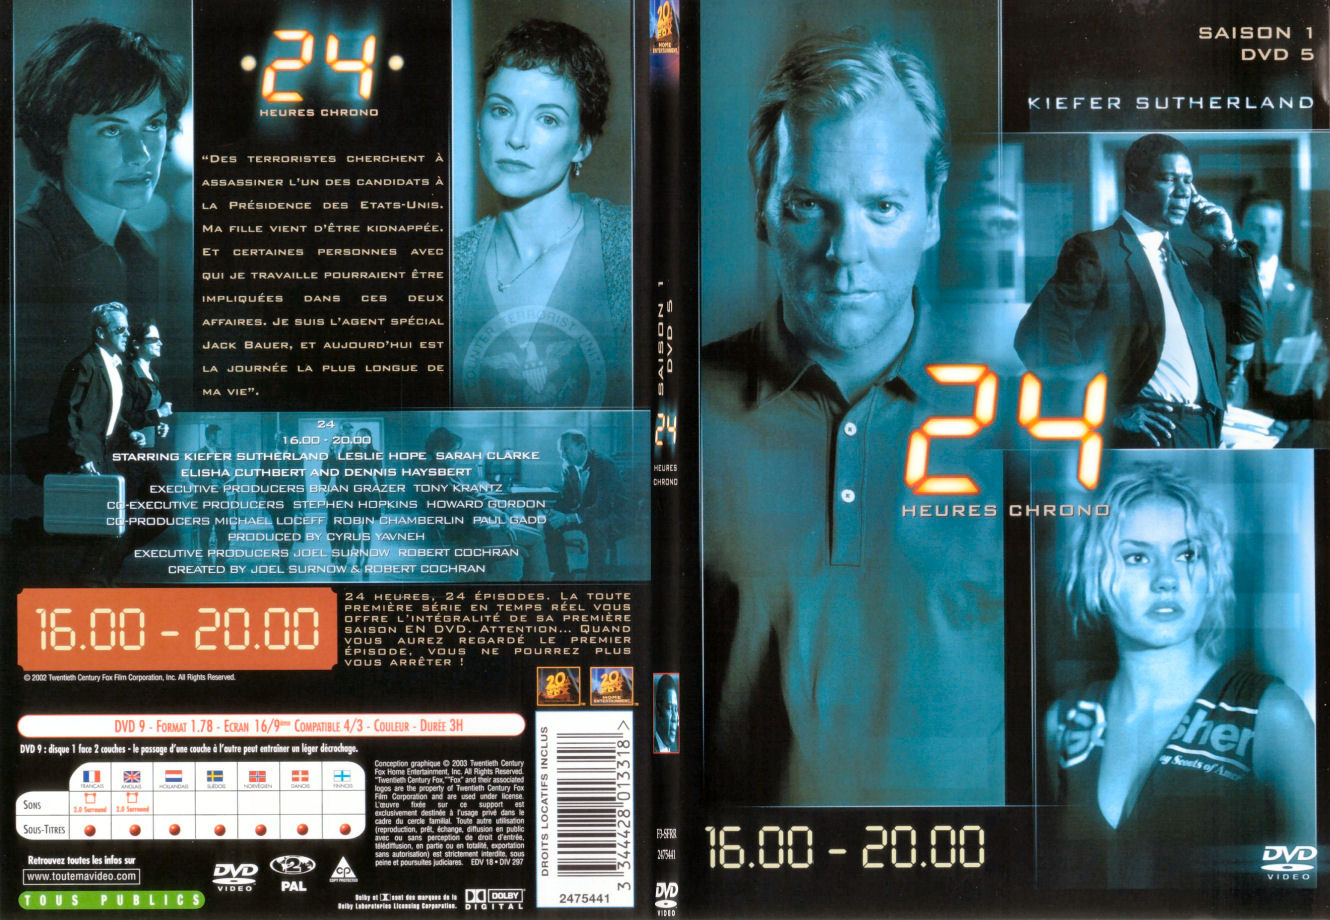 Jaquette DVD 24 heures chrono Saison 1 dvd 5 - SLIM